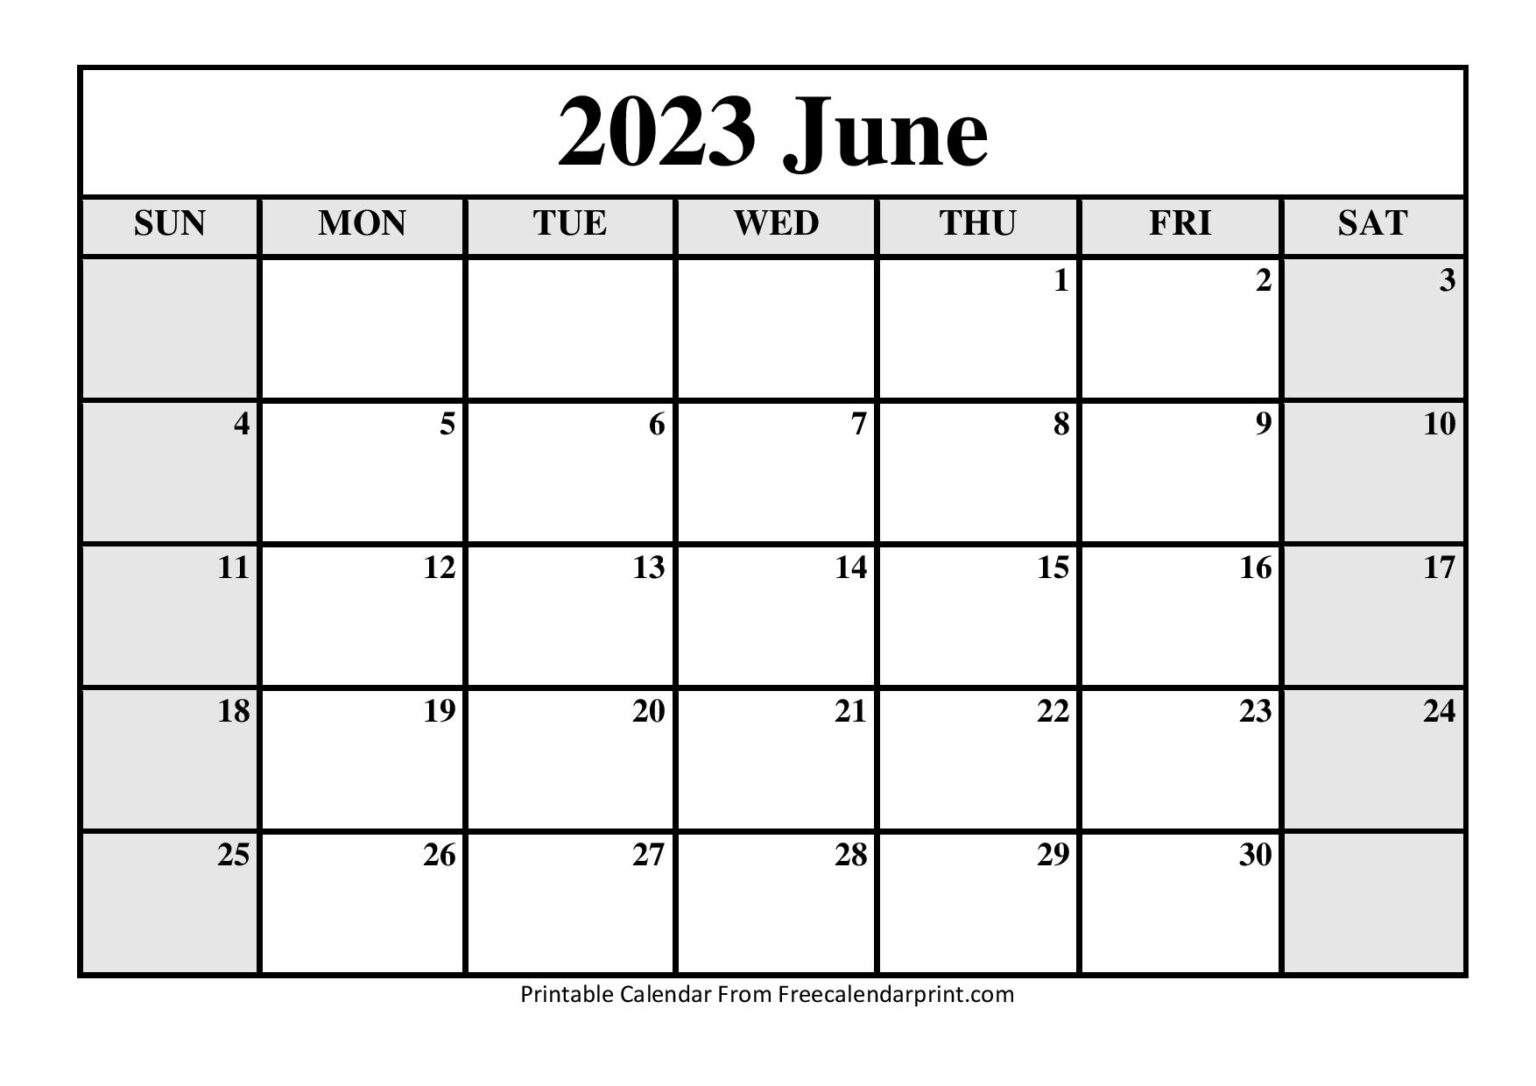 Calendar Templates June 2023 To June 2023 Free Download